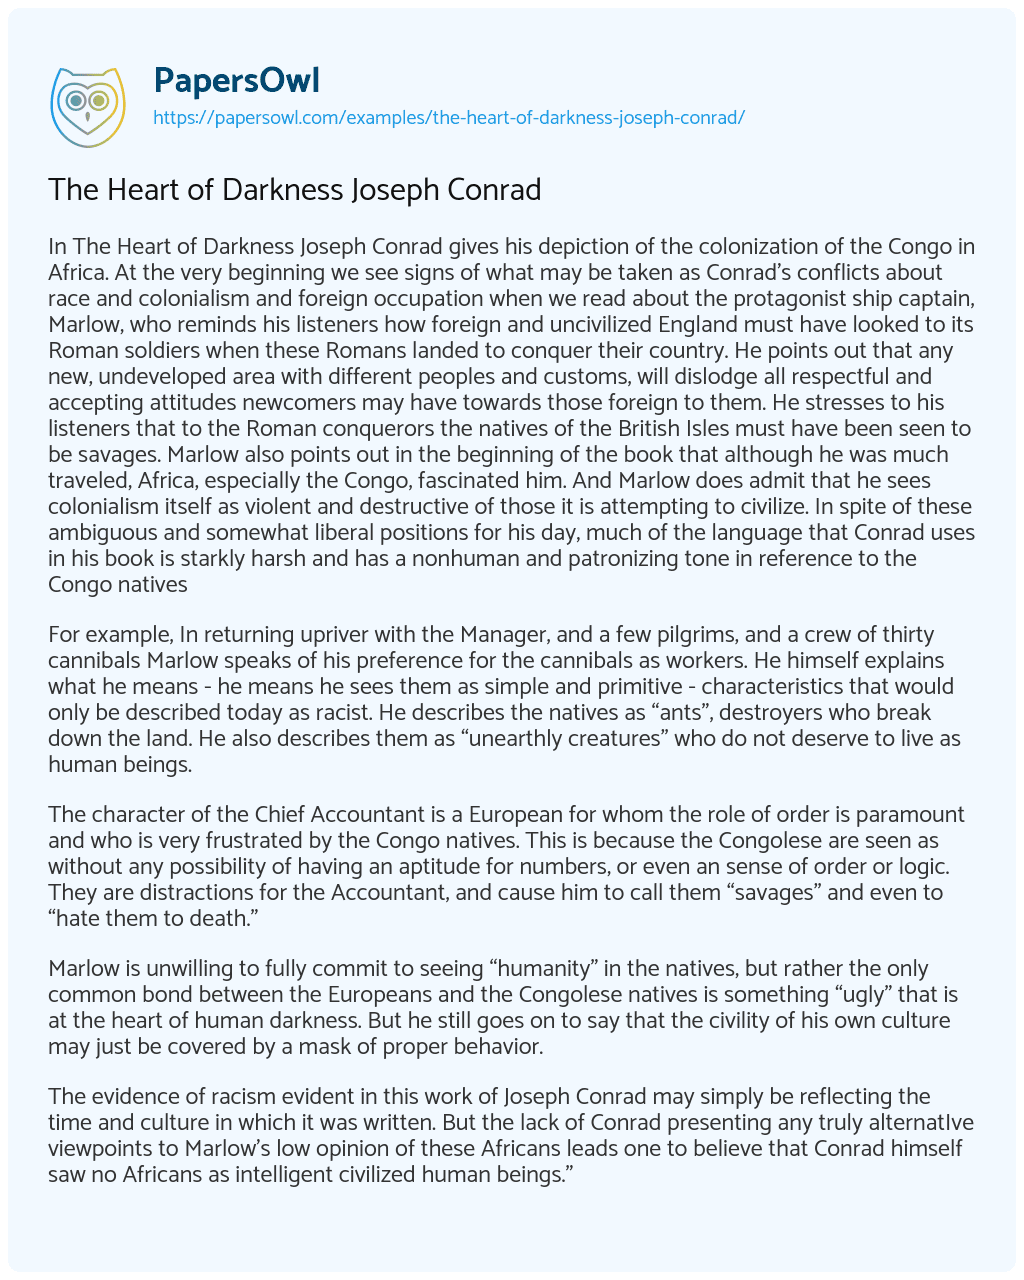 Essay on The Heart of Darkness Joseph Conrad